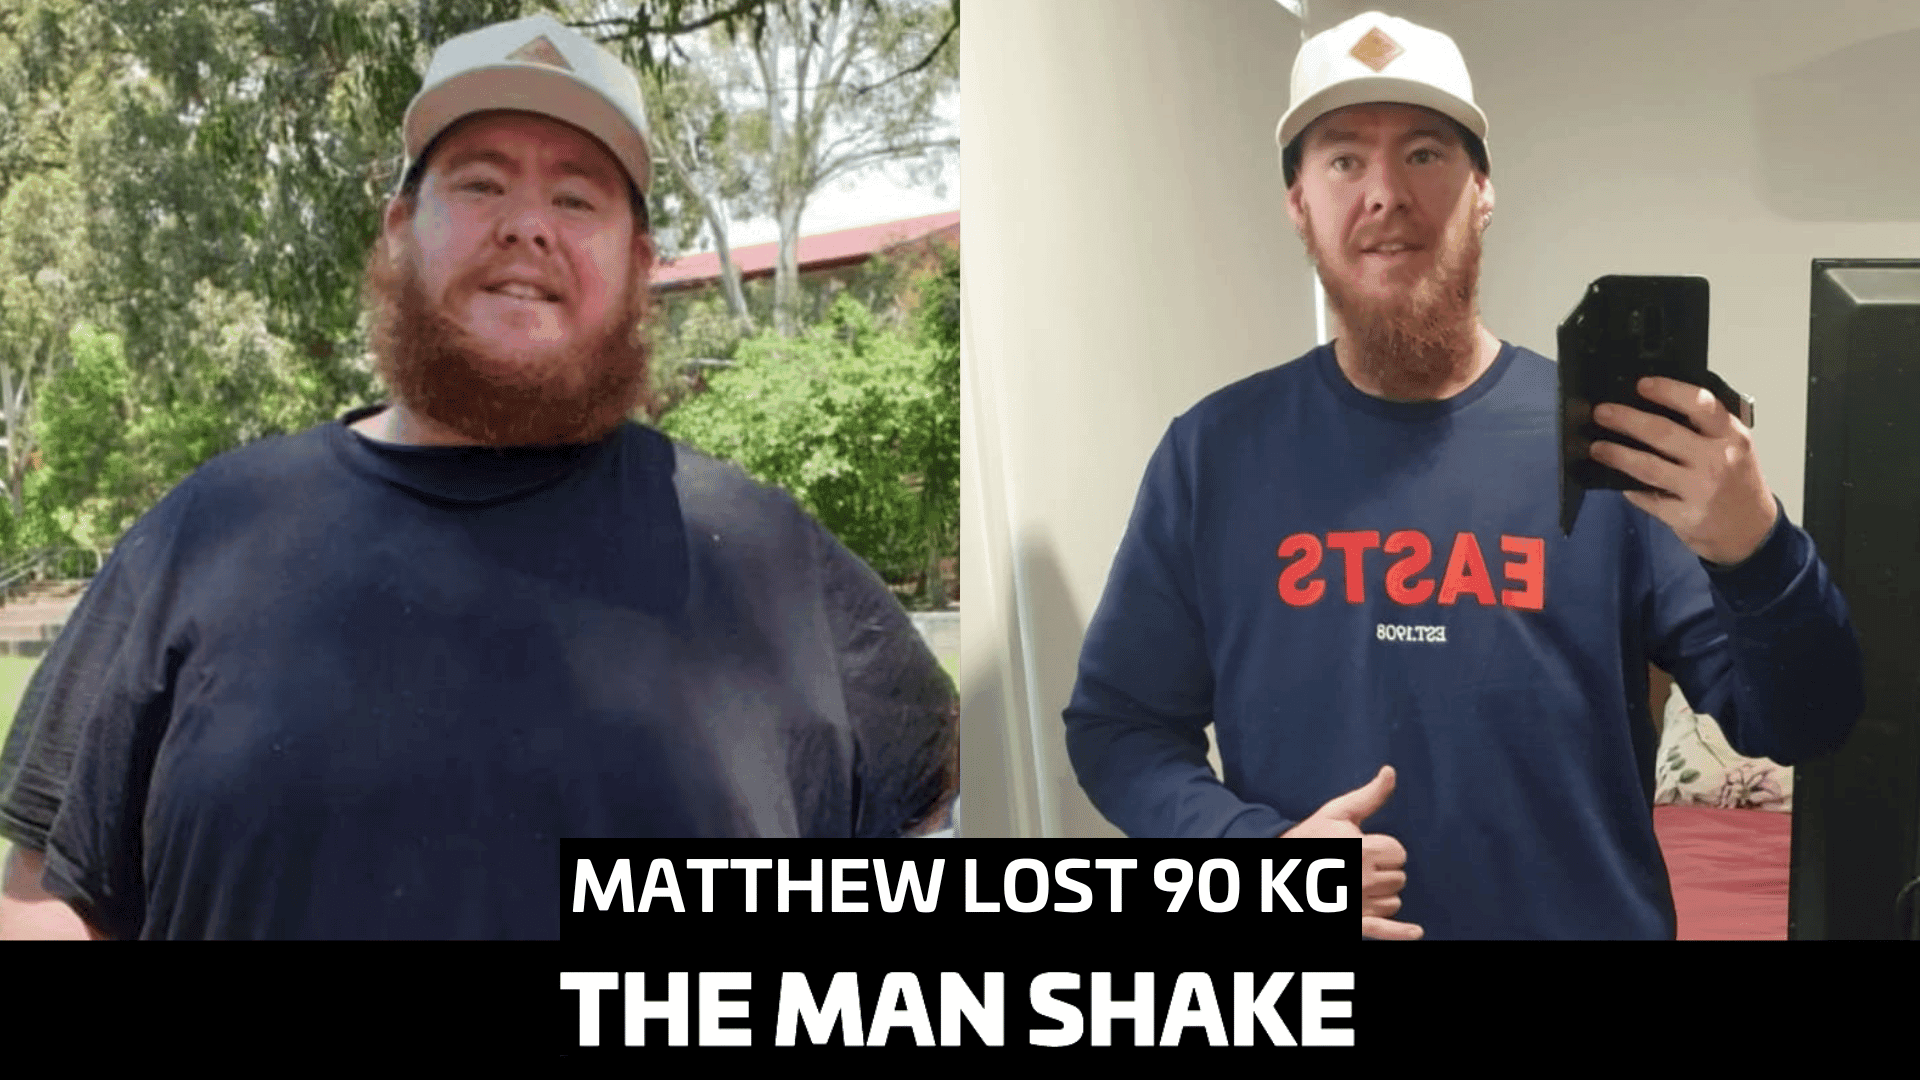 Matthew turned his life around losing 90kg!